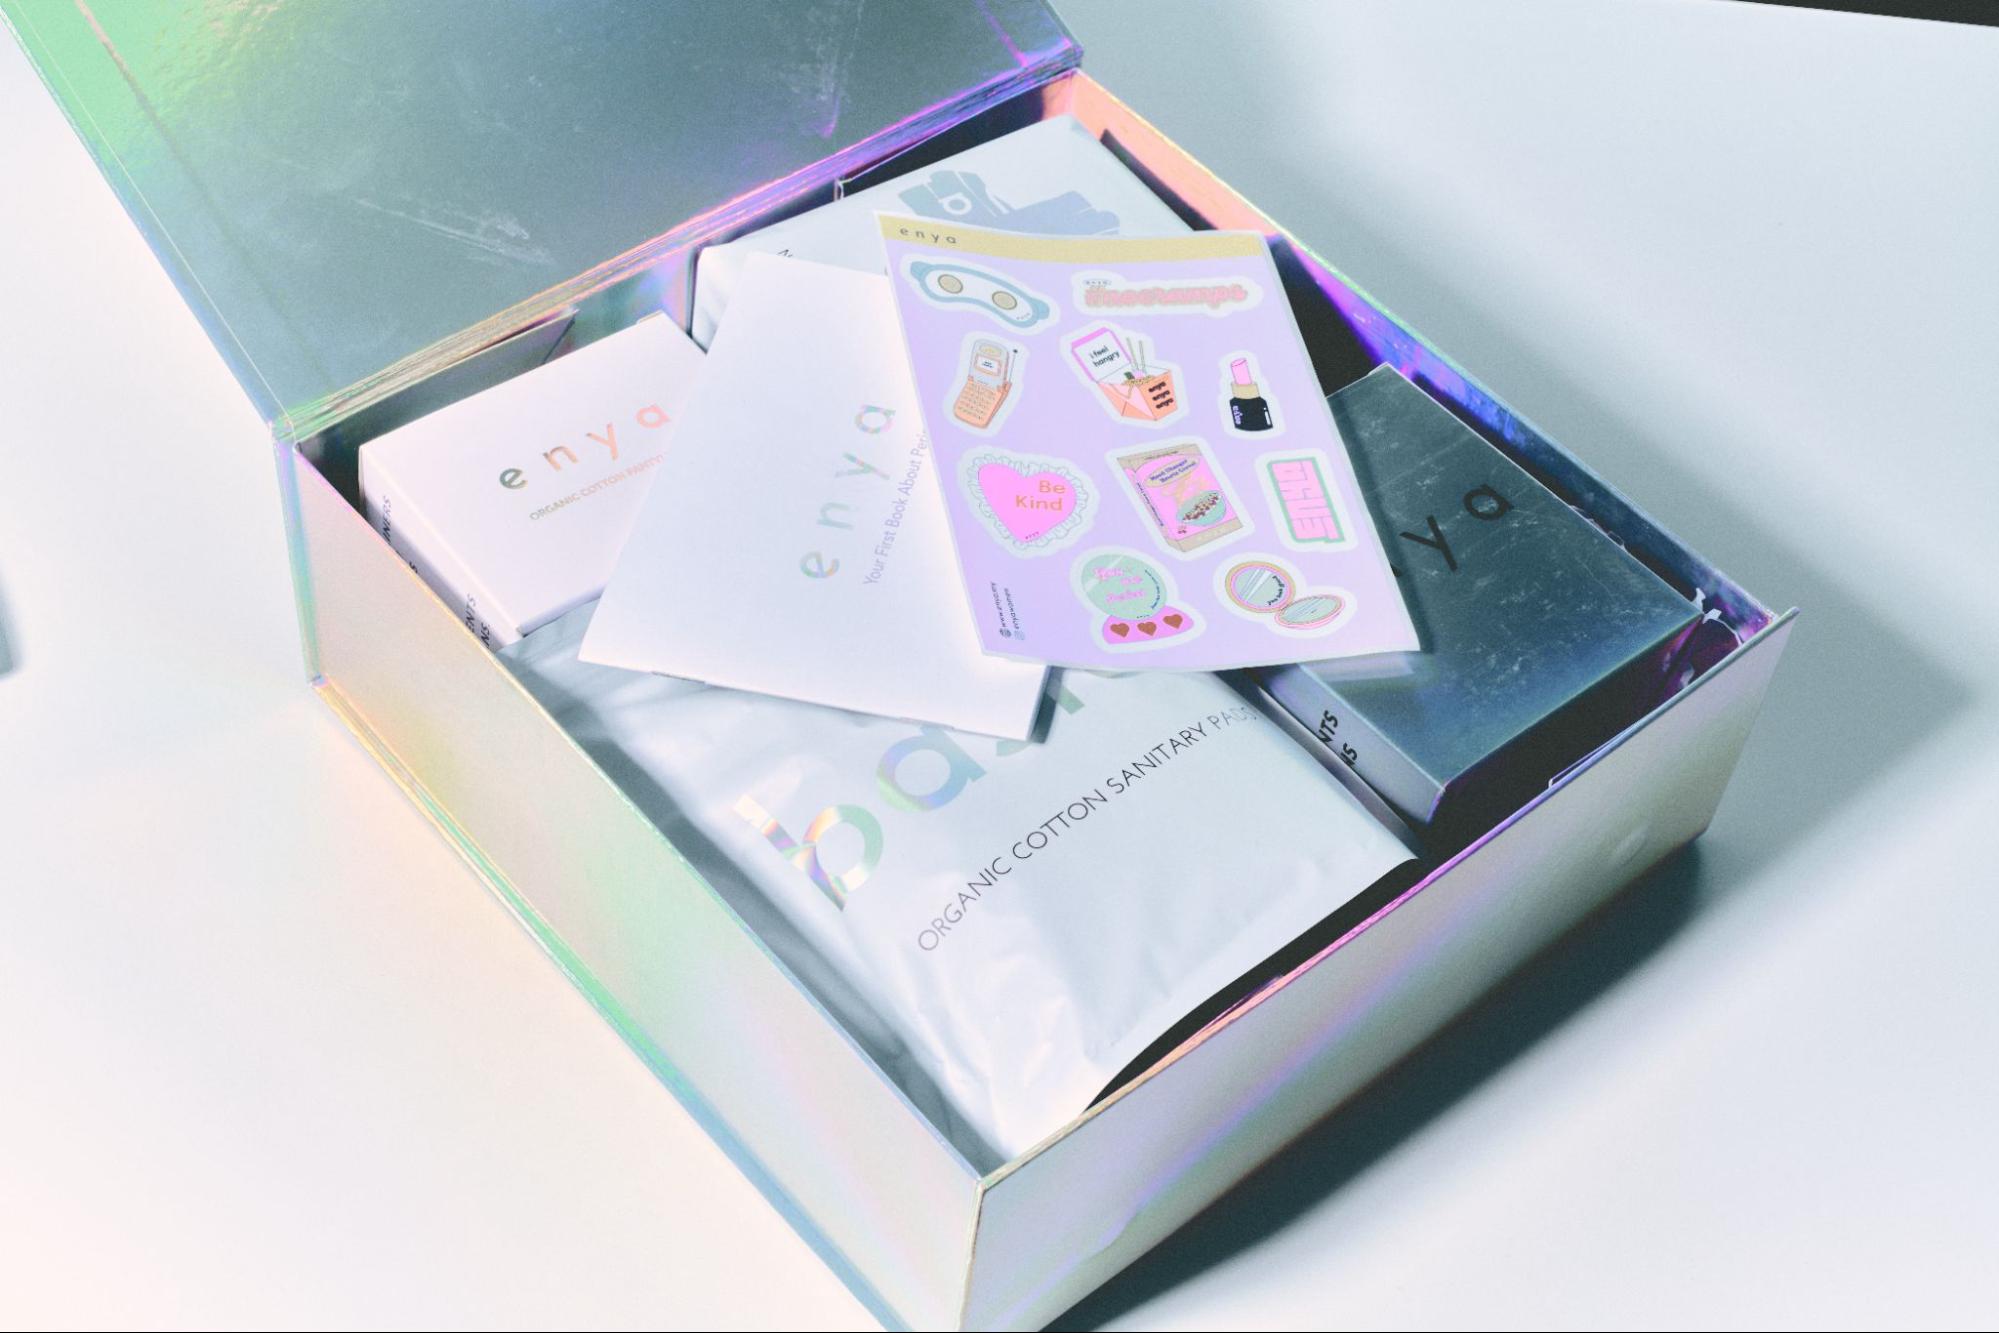 Enya’s Period Care Kits